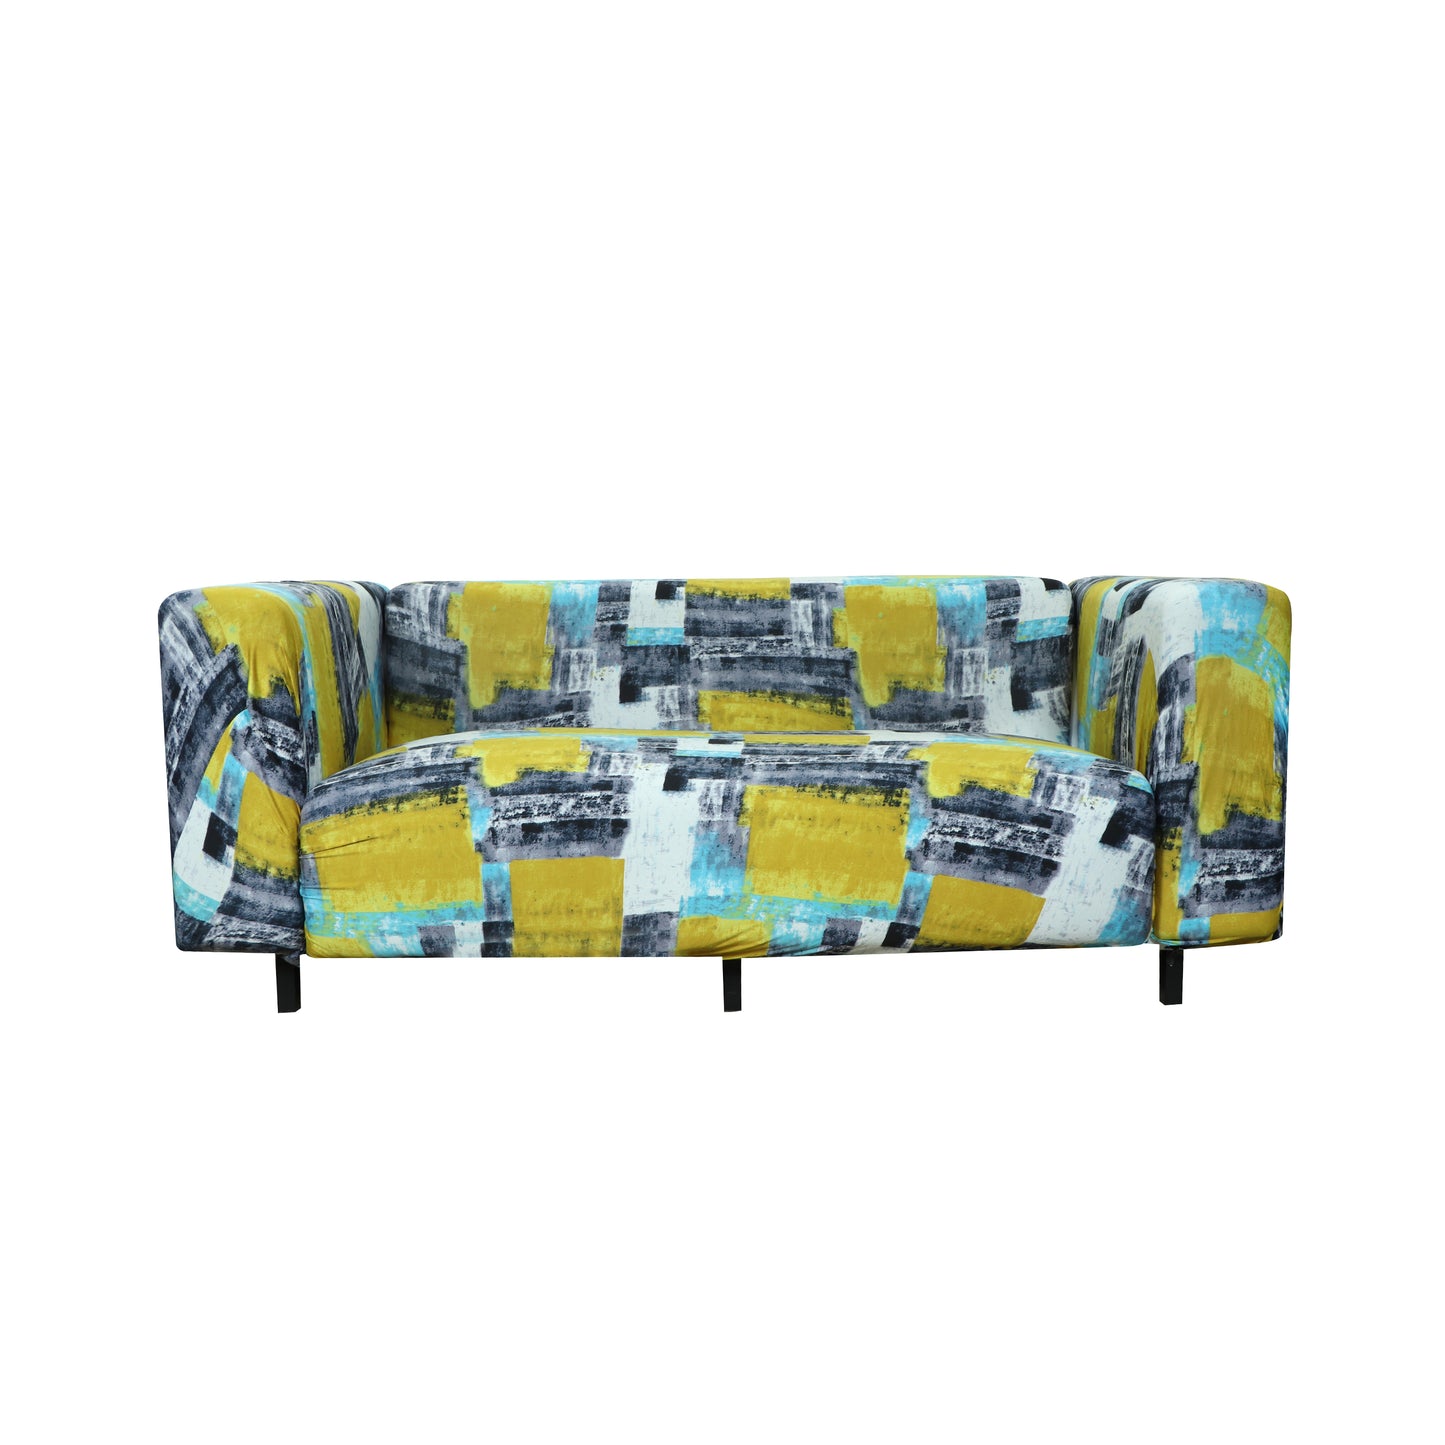 Printed Sofa Cover - Yellow Grey